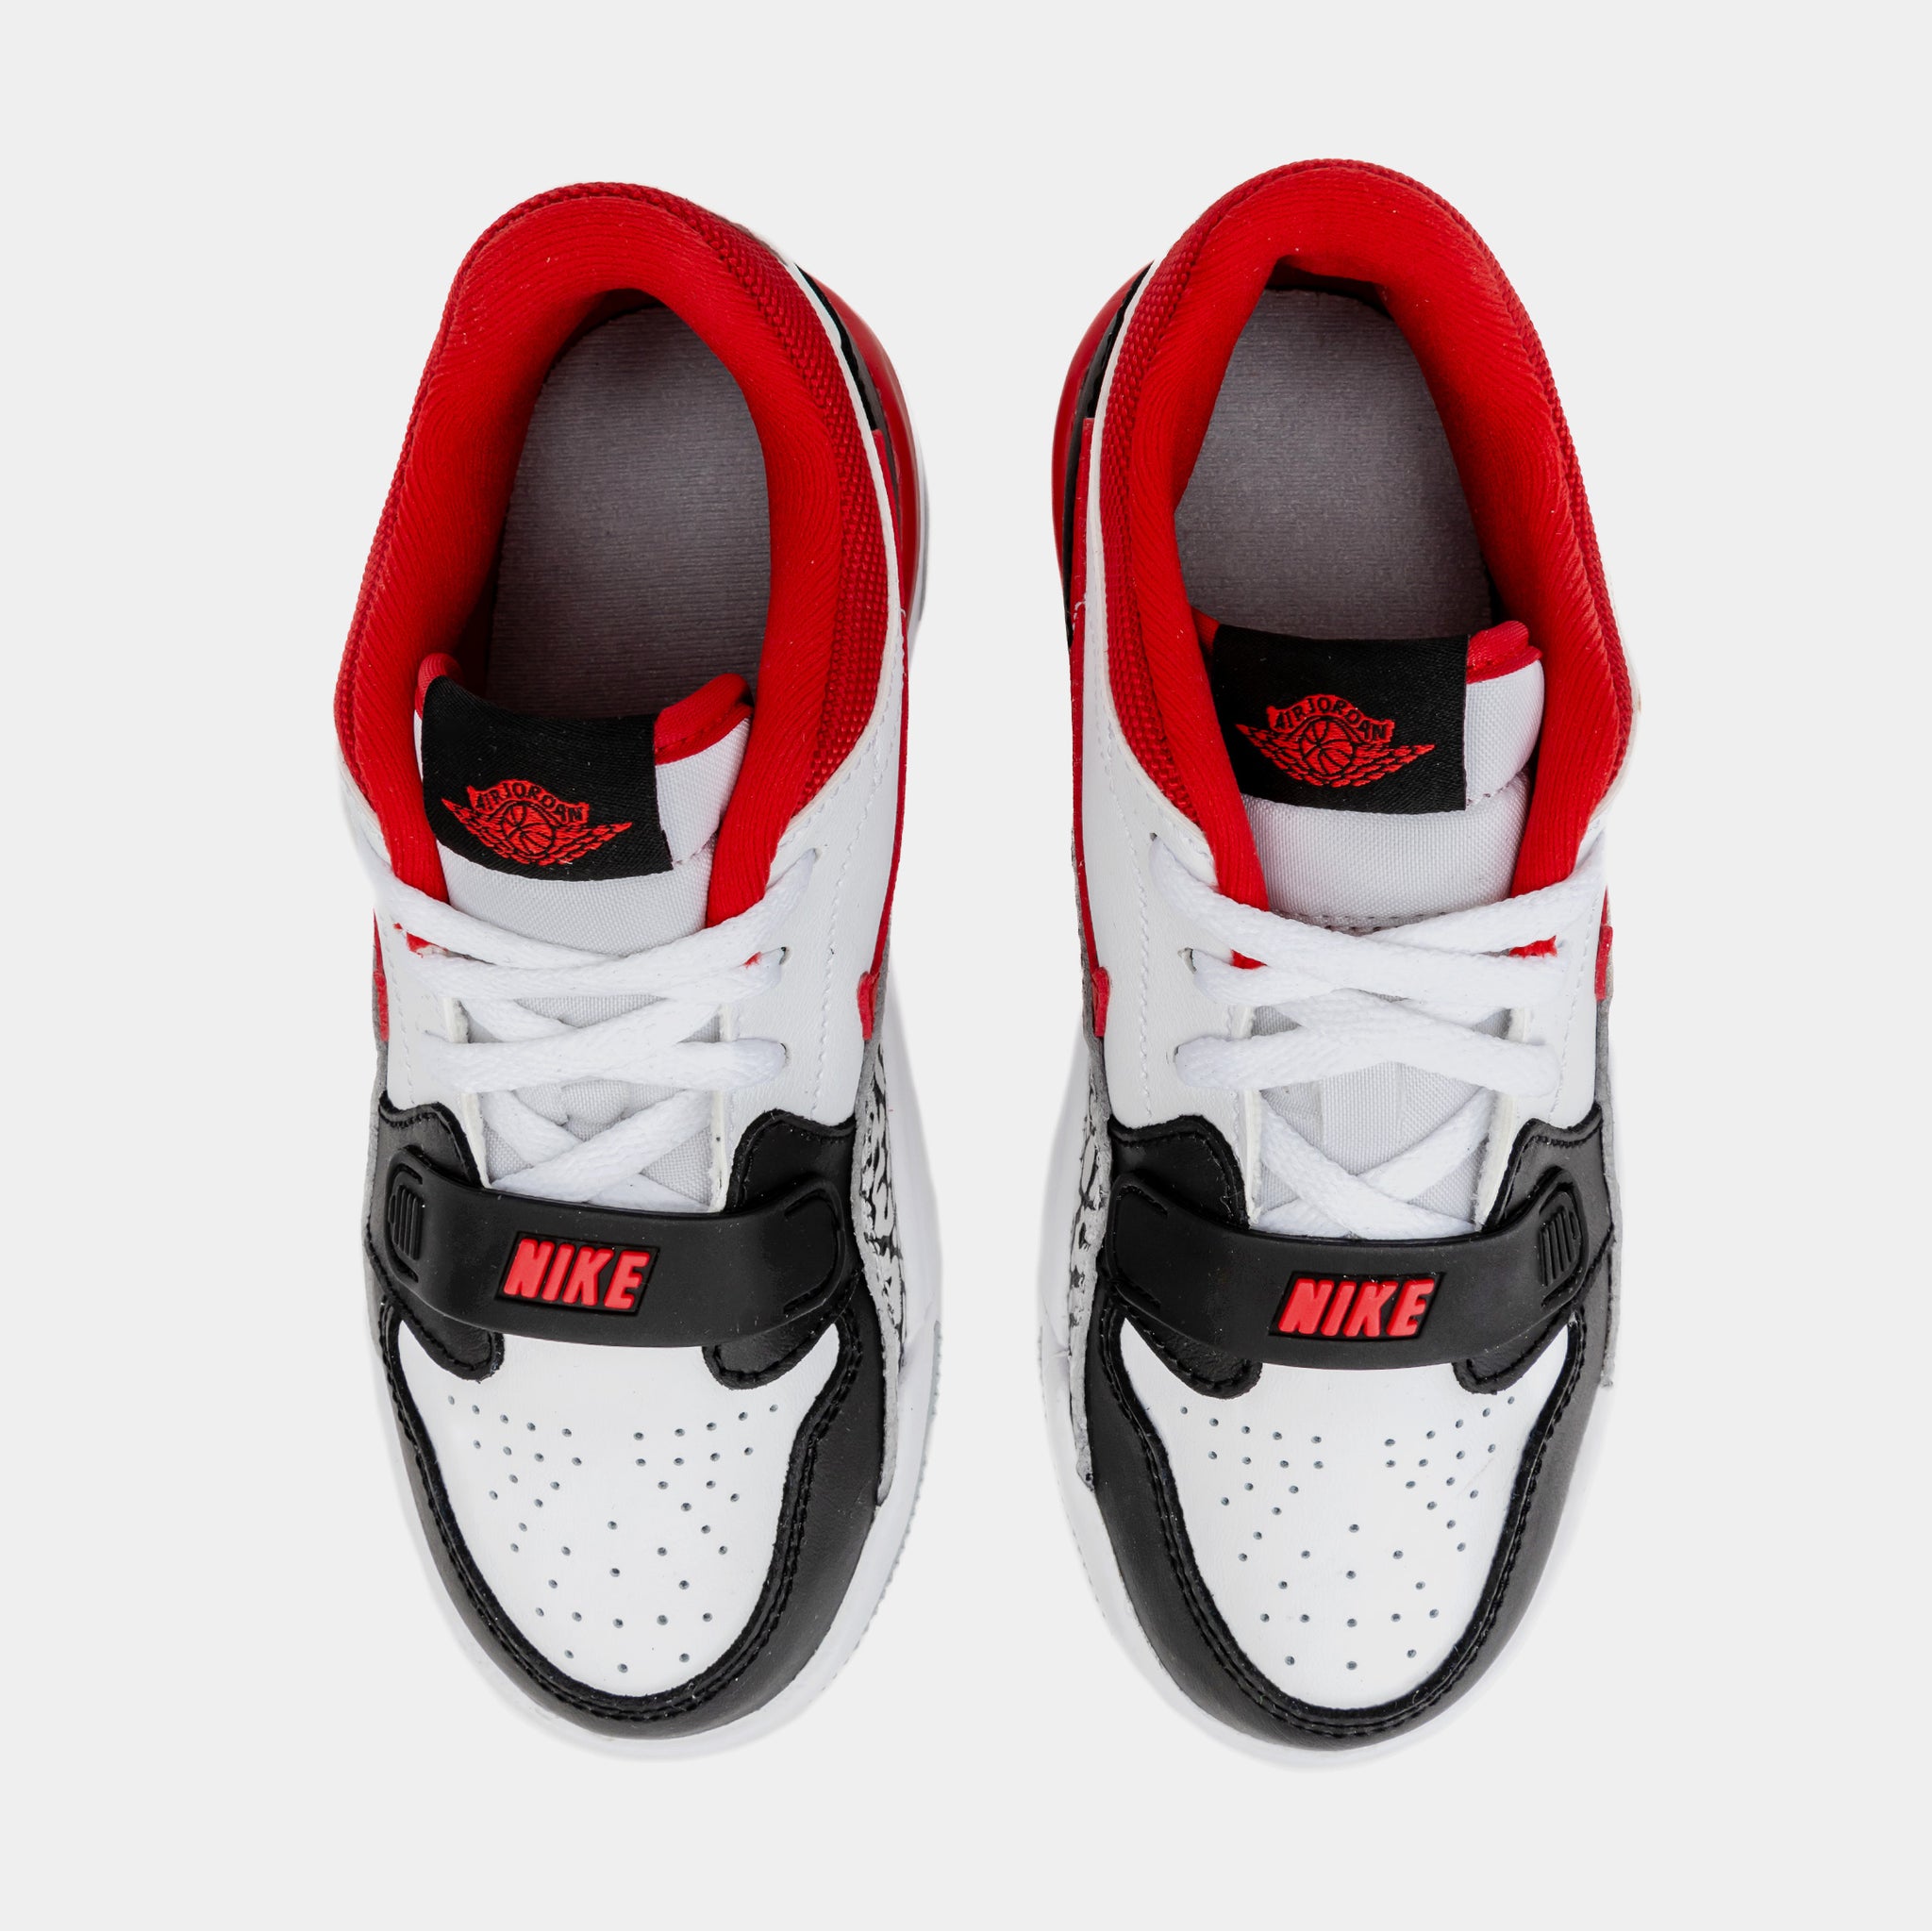 Air Jordan Legacy 312 Low Little Kids' Shoes